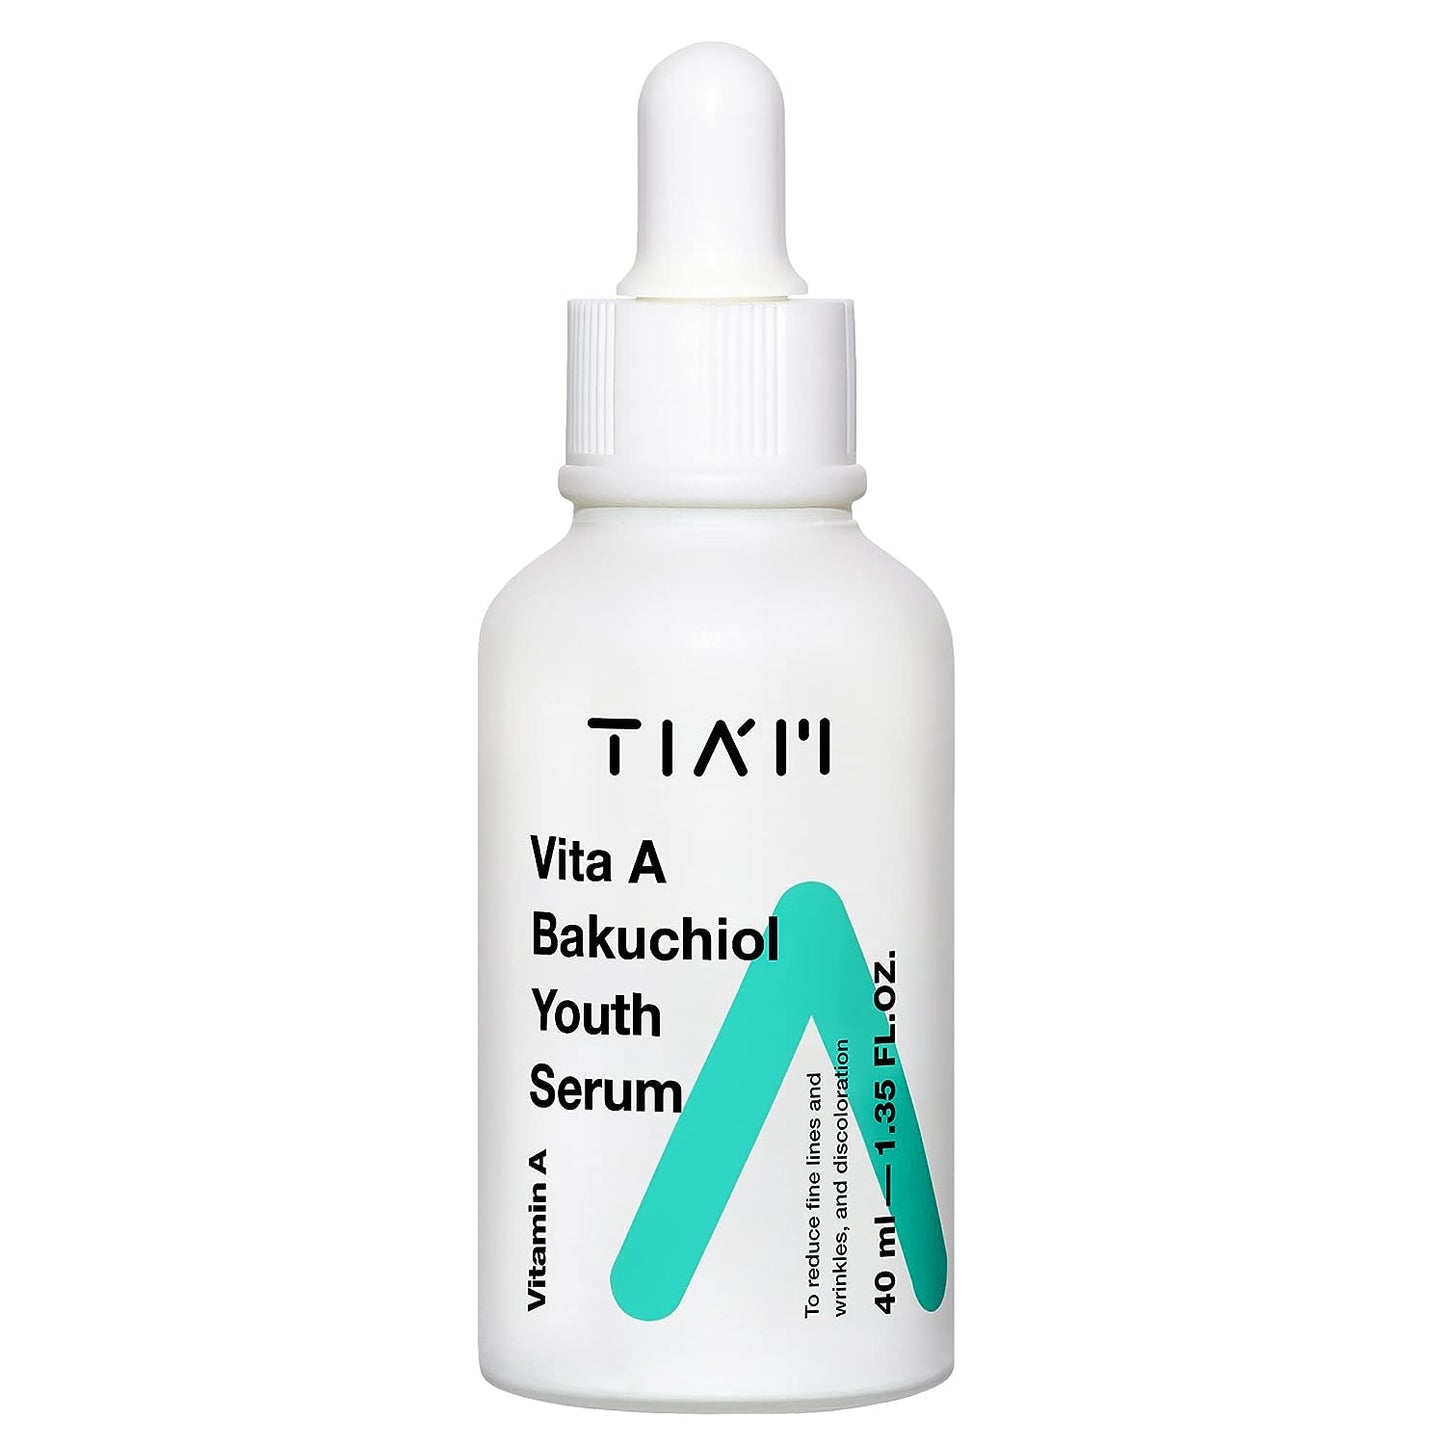 TIAM Vita A Bakuchiol Youth Serum, Anti-Aging Facial Serum for Wrinkles, Dark Spots, Suitable for Sensitive Skin, 1.35 FL.OZ. / 40ml